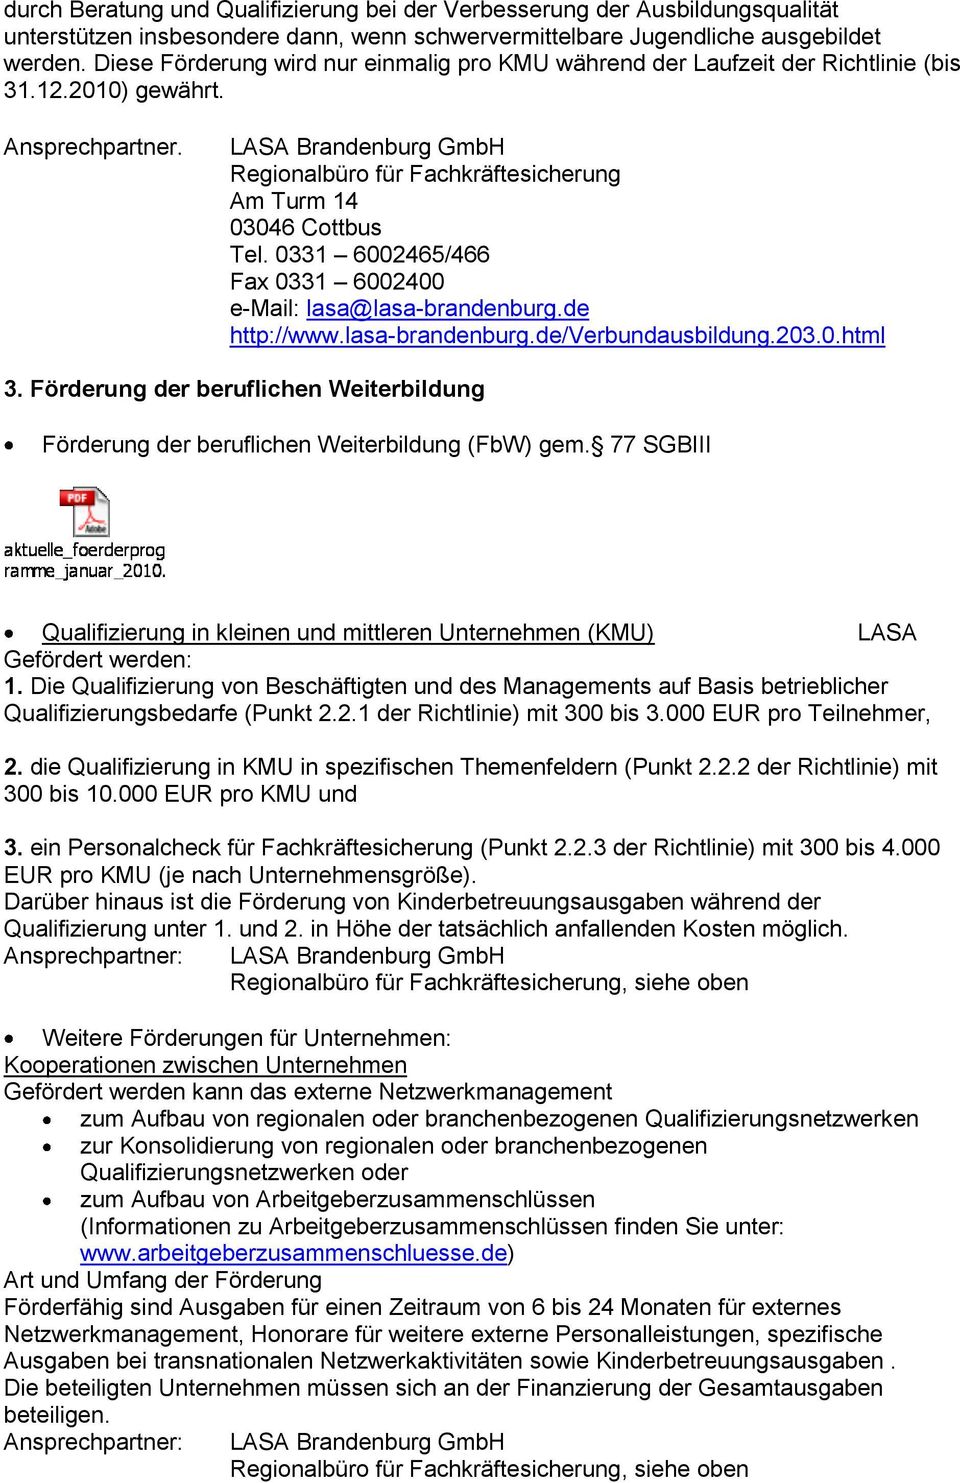 LASA Brandenburg GmbH Regionalbüro für Fachkräftesicherung Am Turm 14 03046 Cottbus Tel. 0331 6002465/466 Fax 0331 6002400 e-mail: lasa@lasa-brandenburg.de http://www.lasa-brandenburg.de/verbundausbildung.